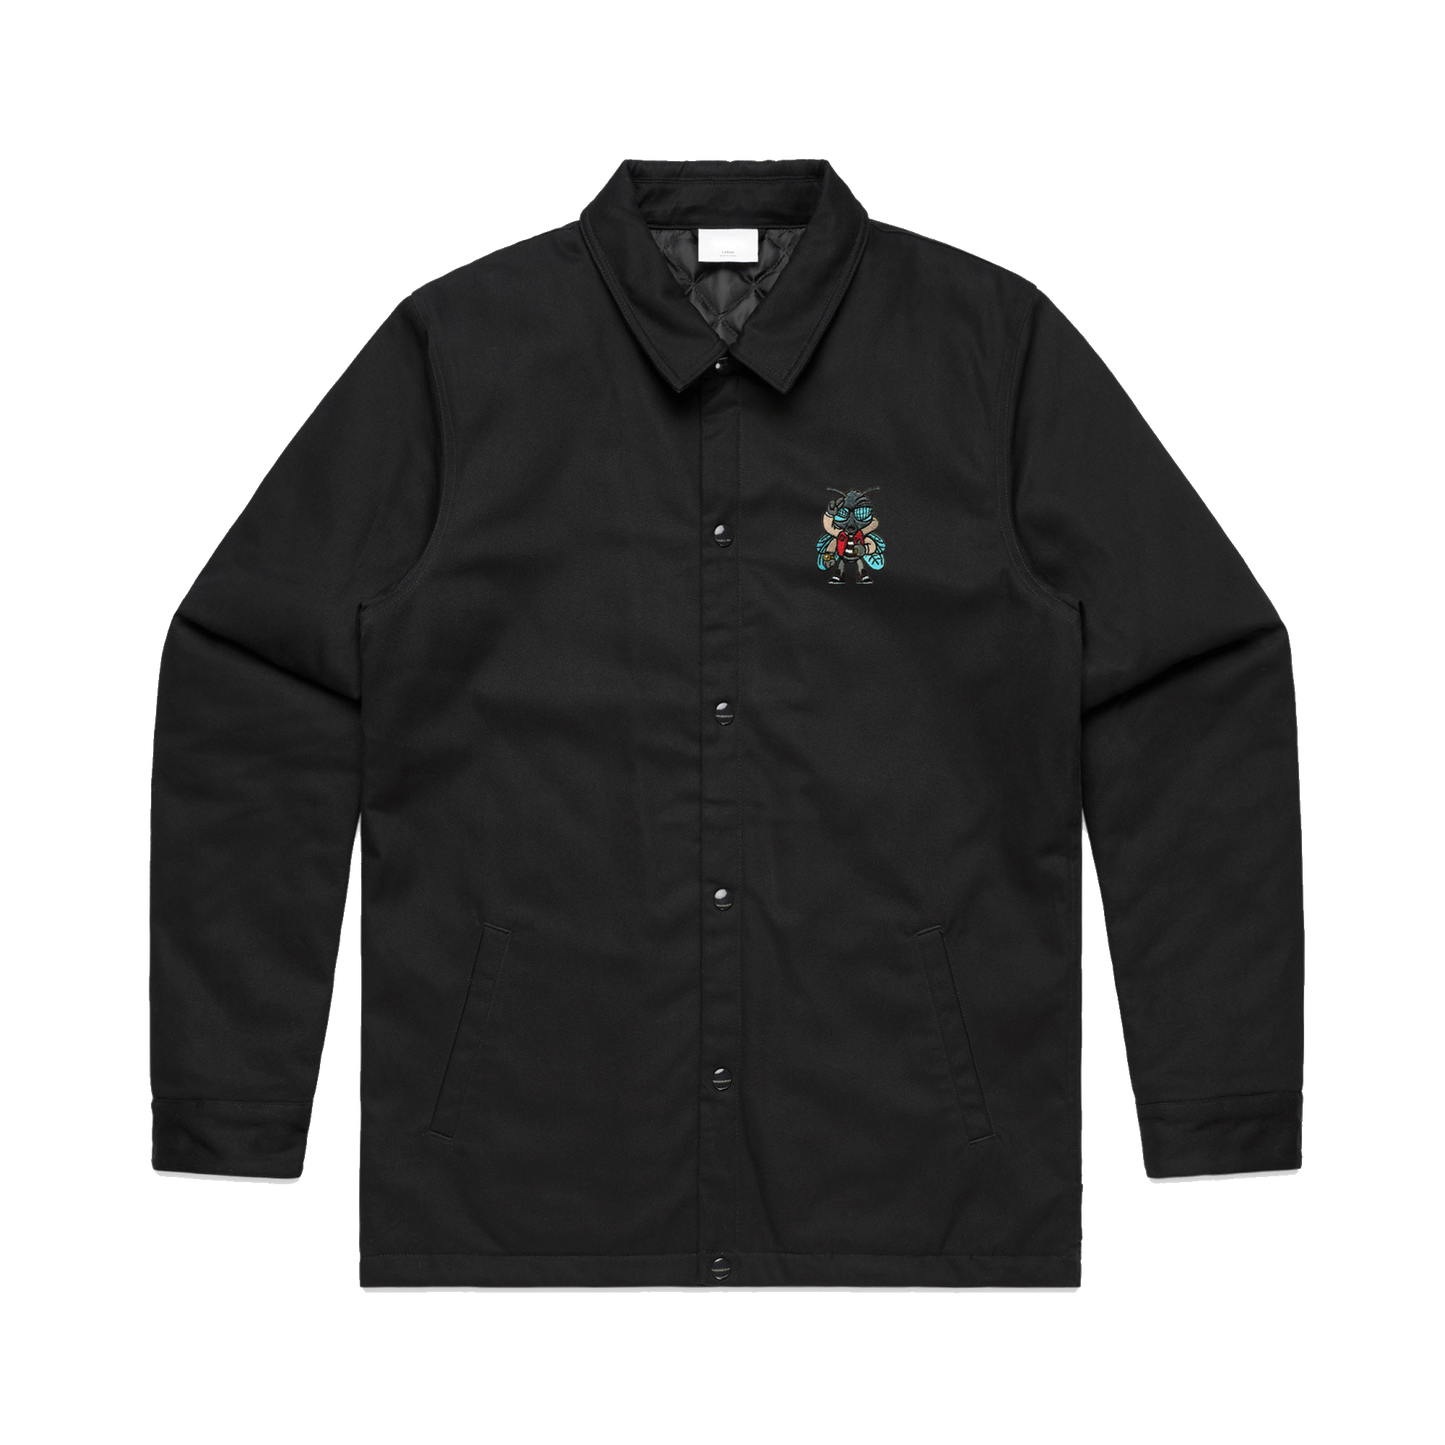 Fly Guy Embroidered Unisex Work Jacket - Black